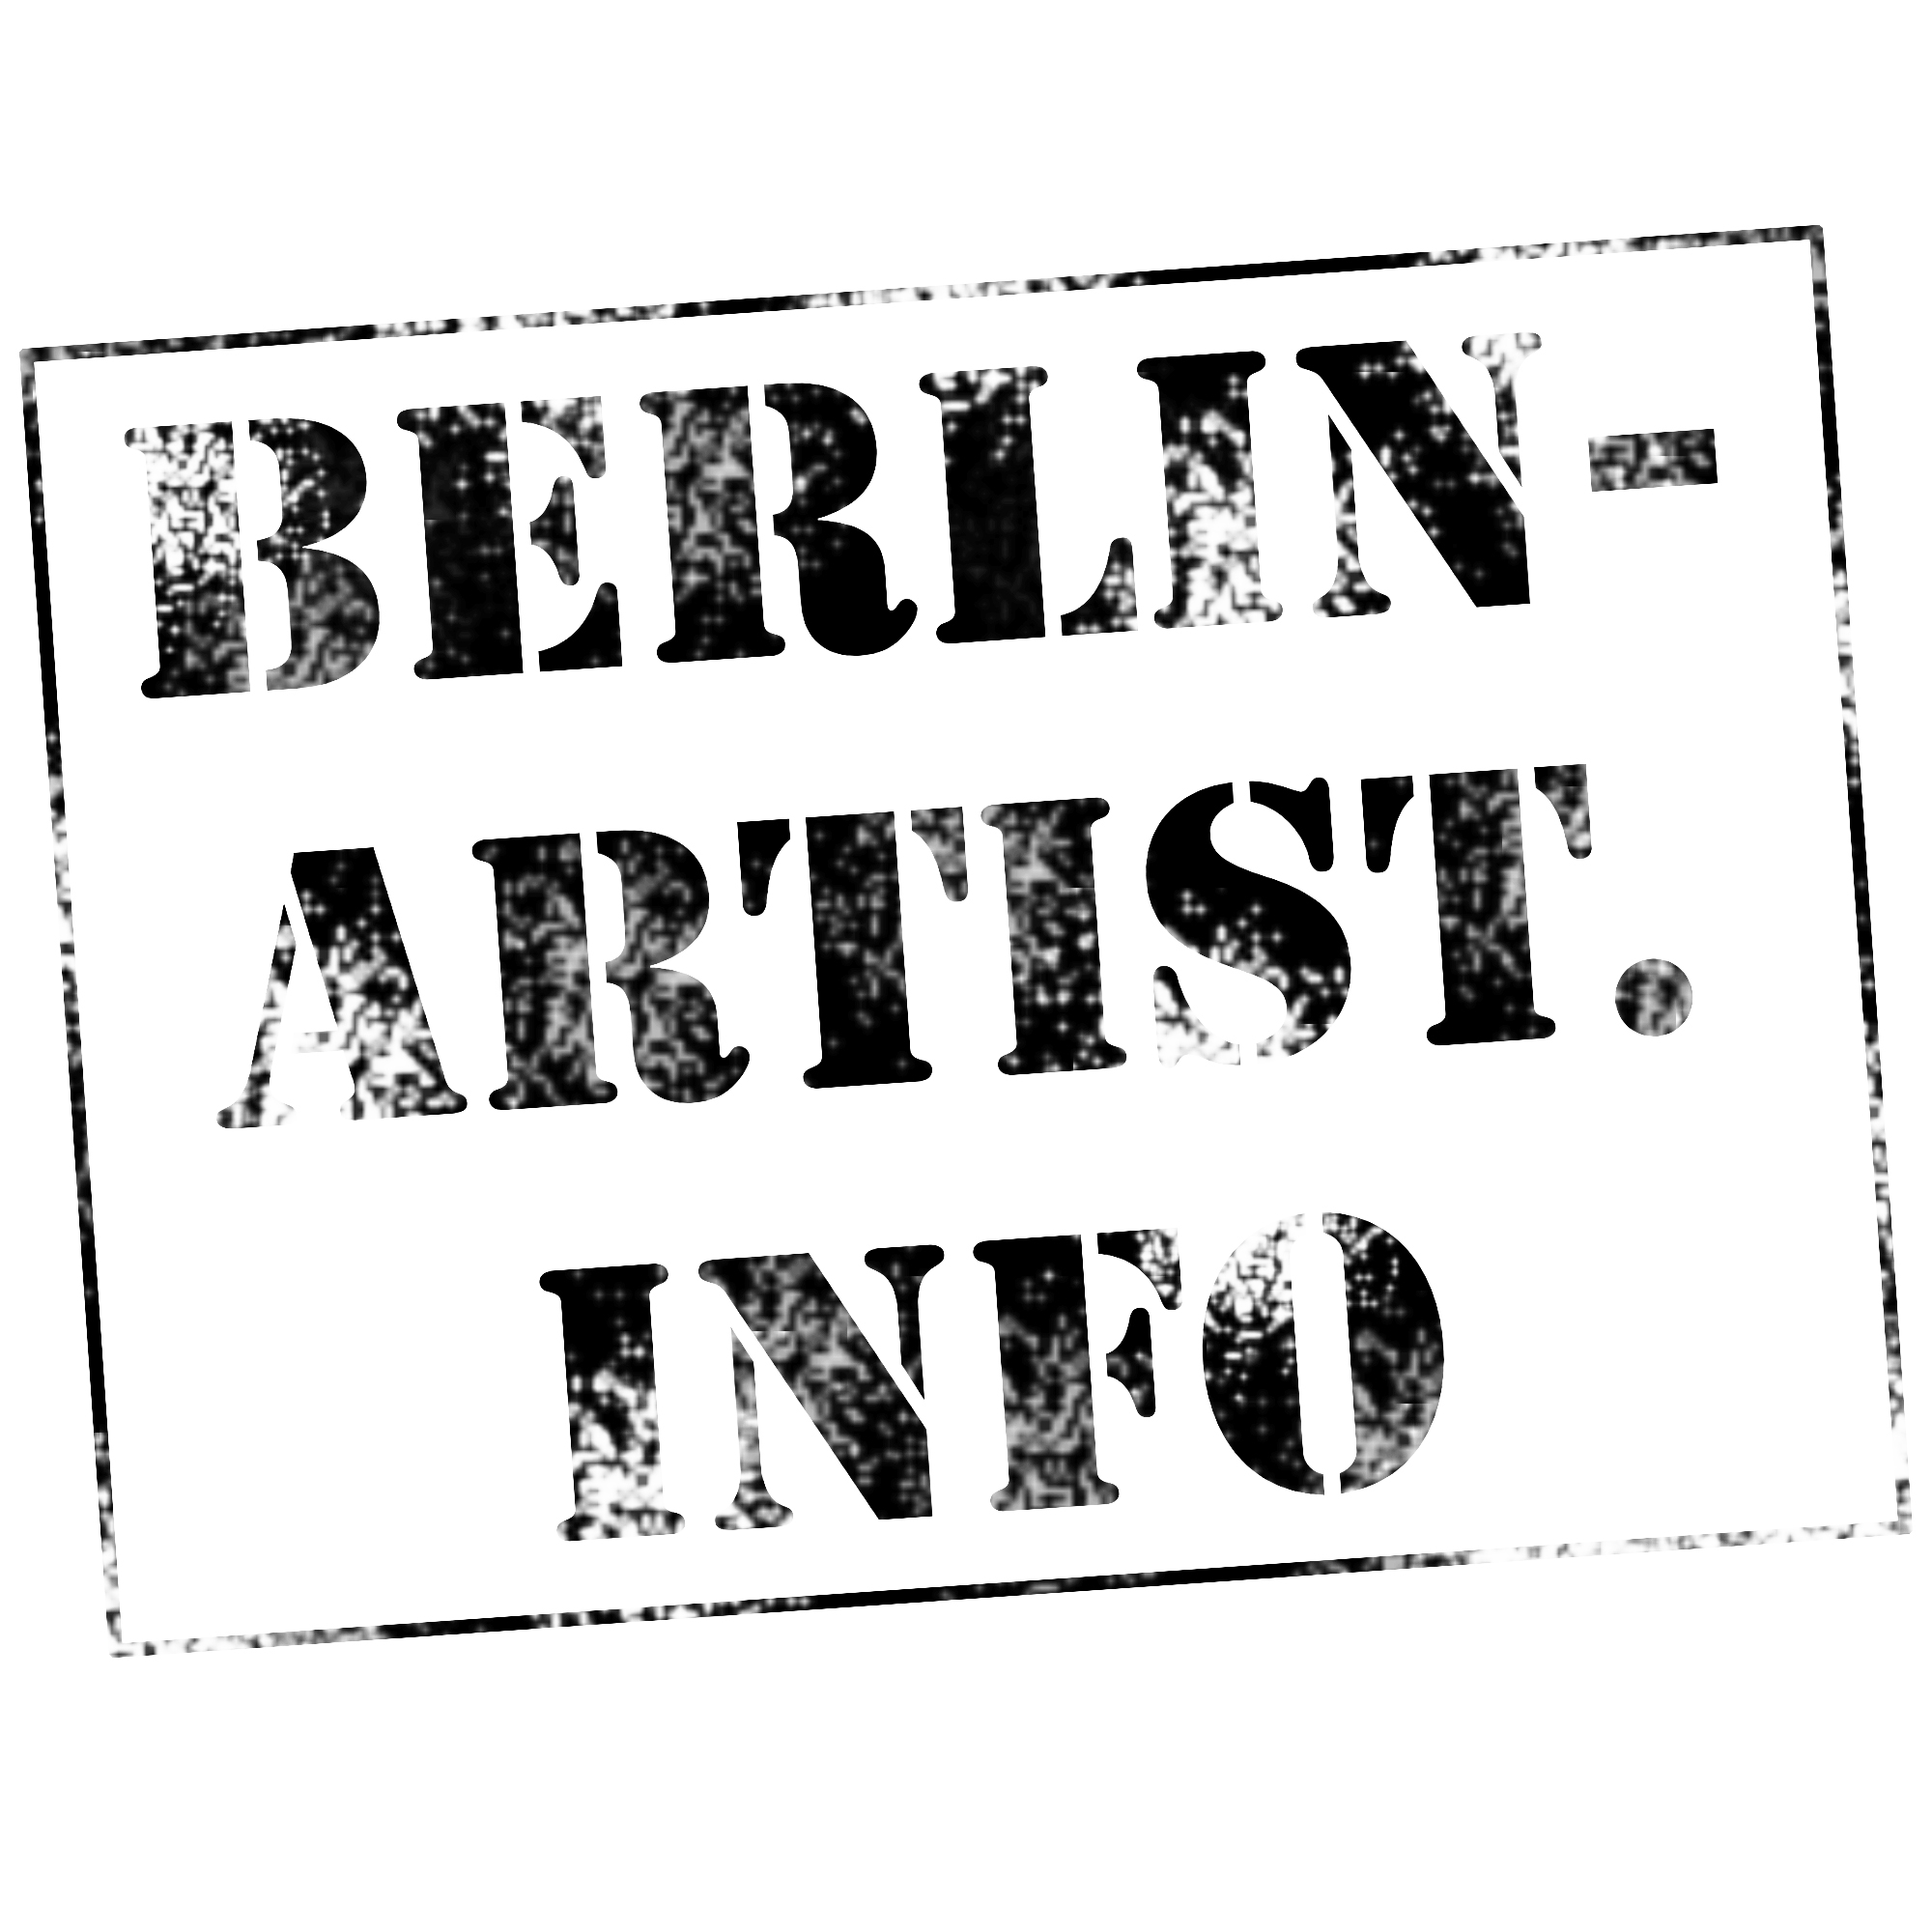 (c) Berlin-artist.info